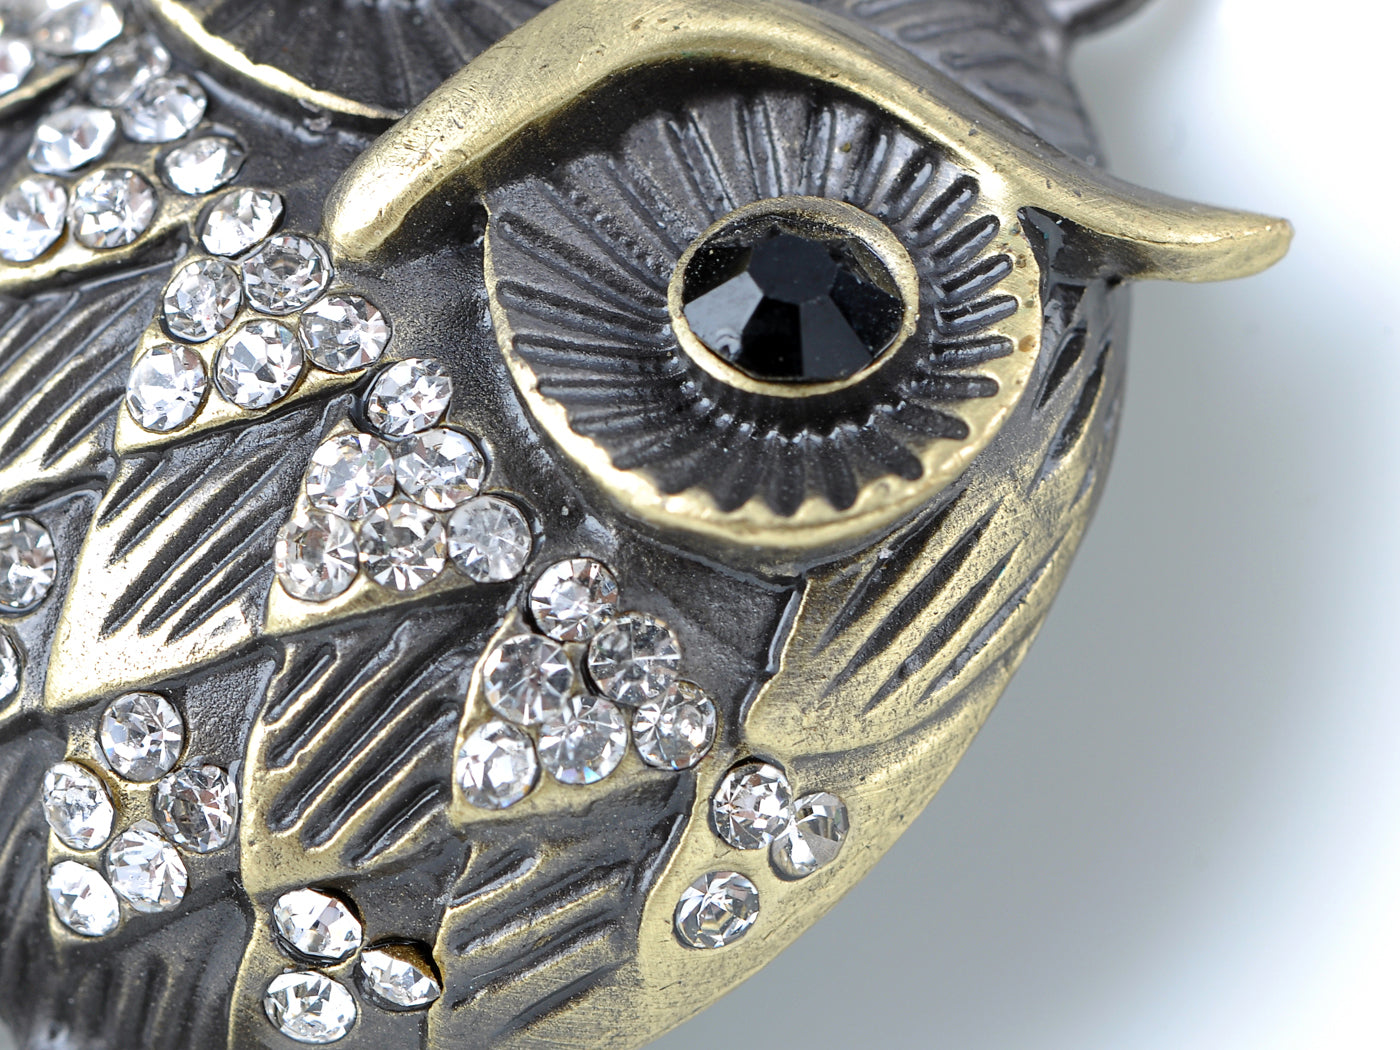 Gun Antique Vintage Fat Owl Bird Pendant Necklace